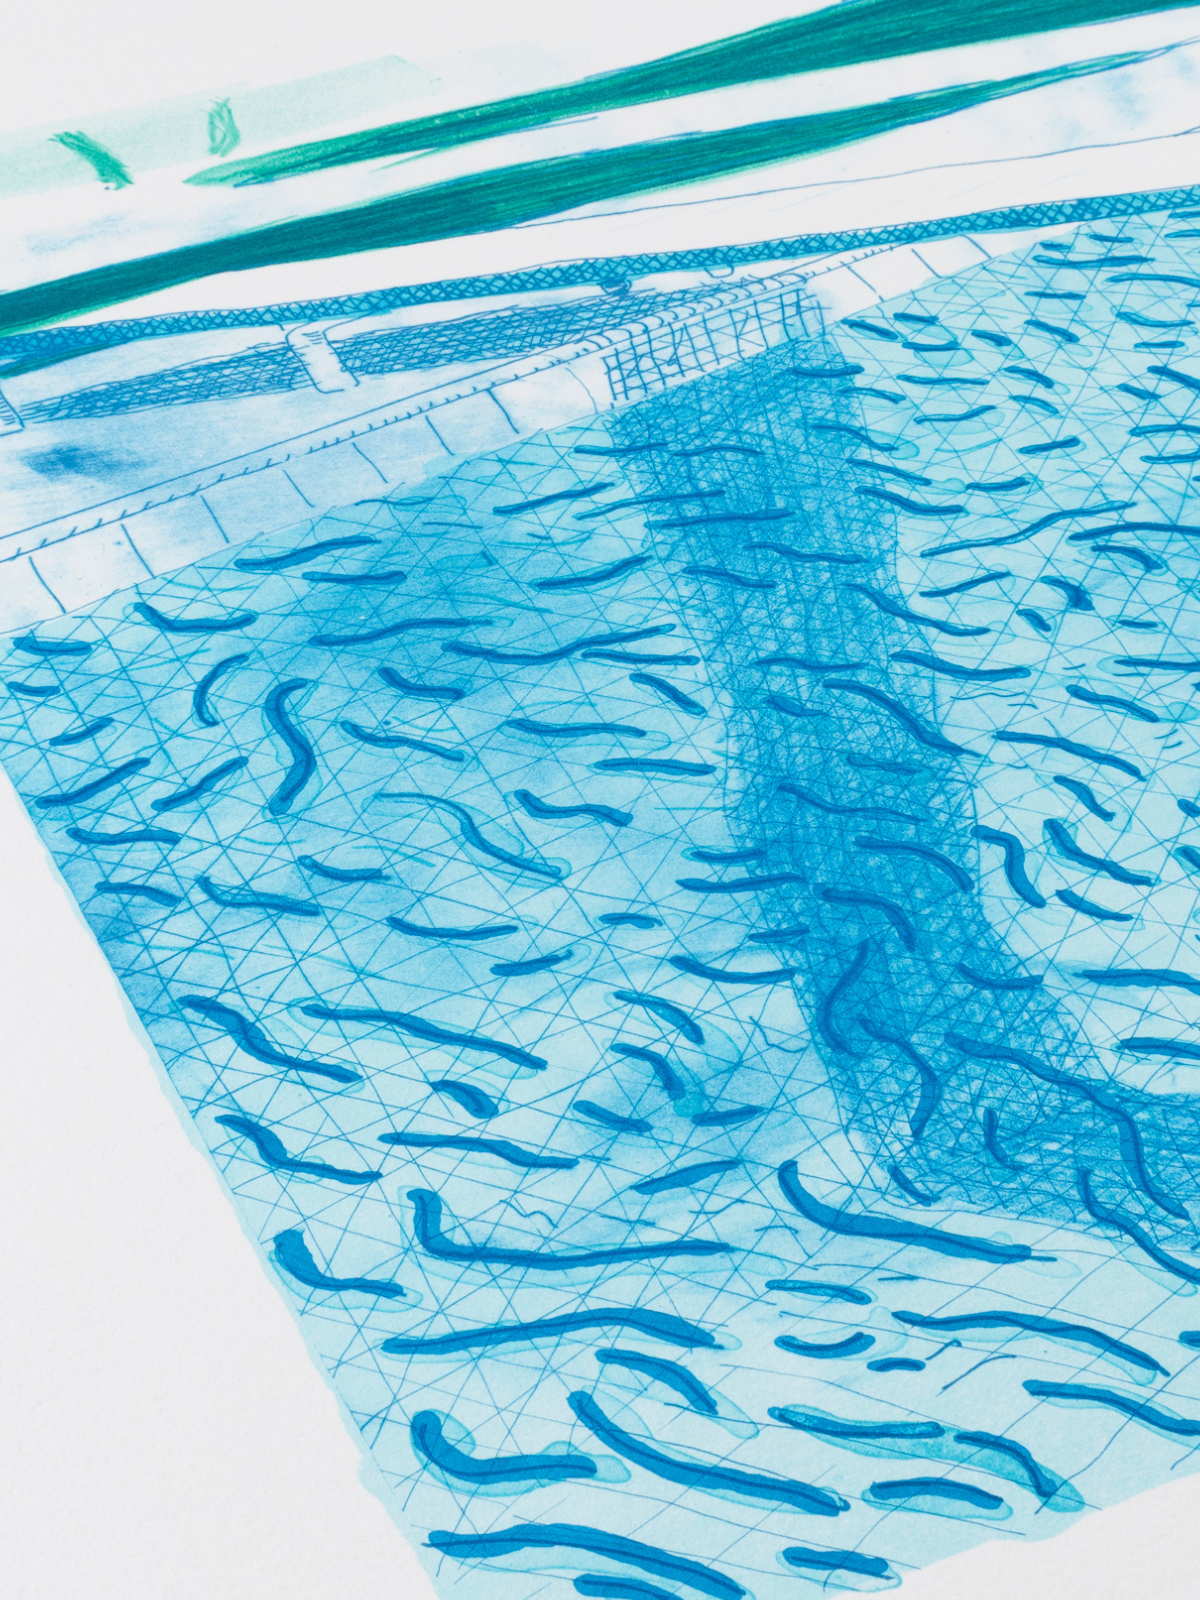 David Hockney Swimming Pool Blue Water Print